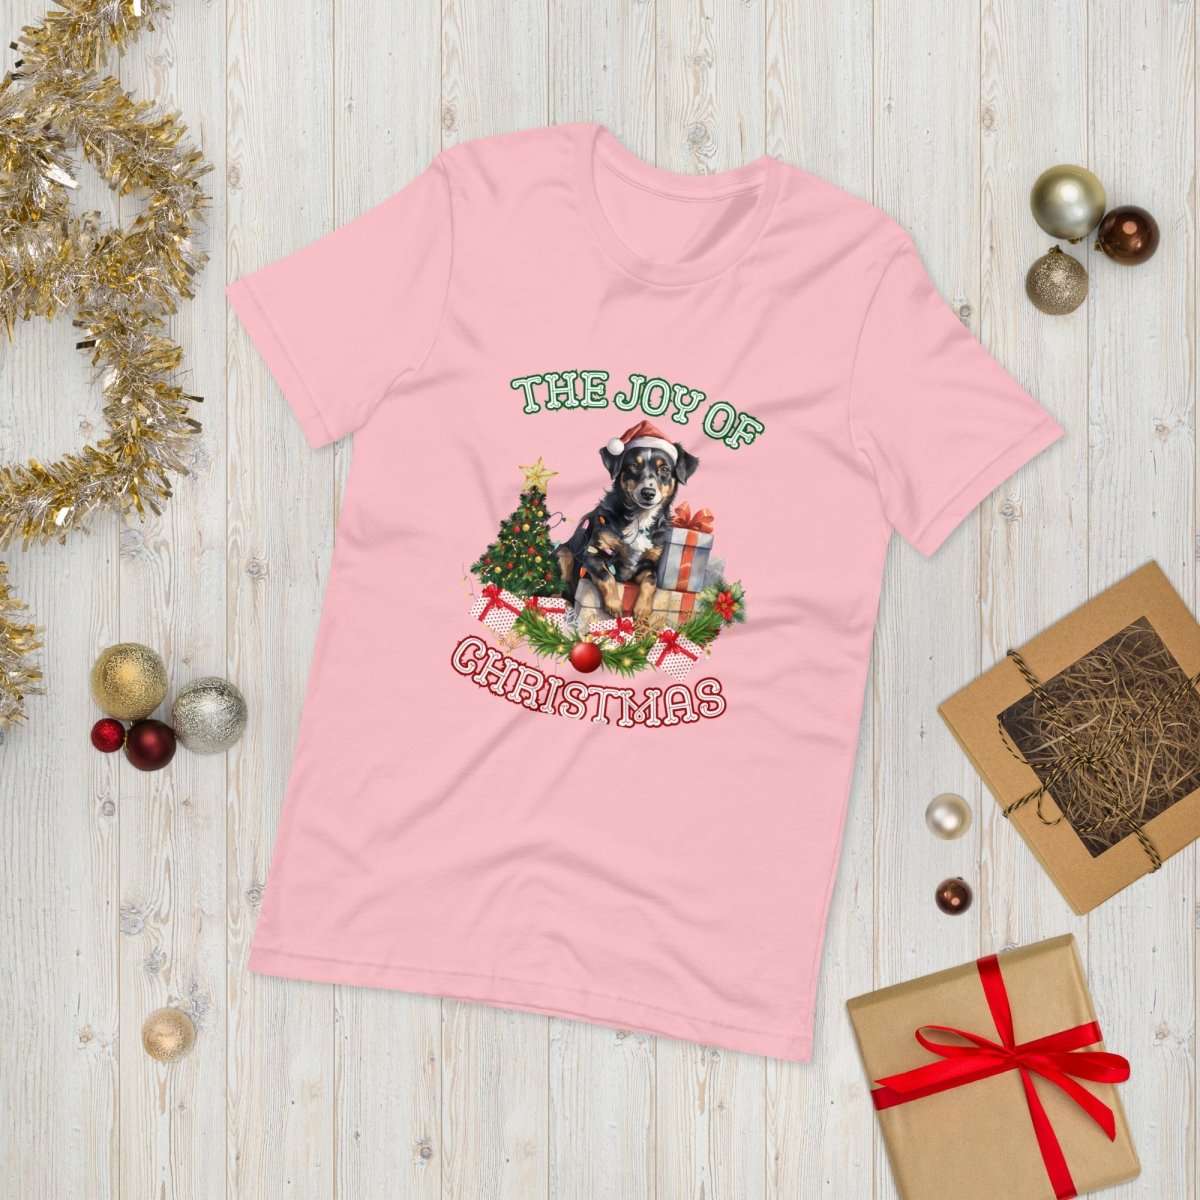 Christmas Shepherd Dog T-Shirt - High Quality Festive Unisex T-Shirt, Gift for Shepherd Owner, Gift for Doglovers, Cute Xmas Dog Tee - Everything Pixel